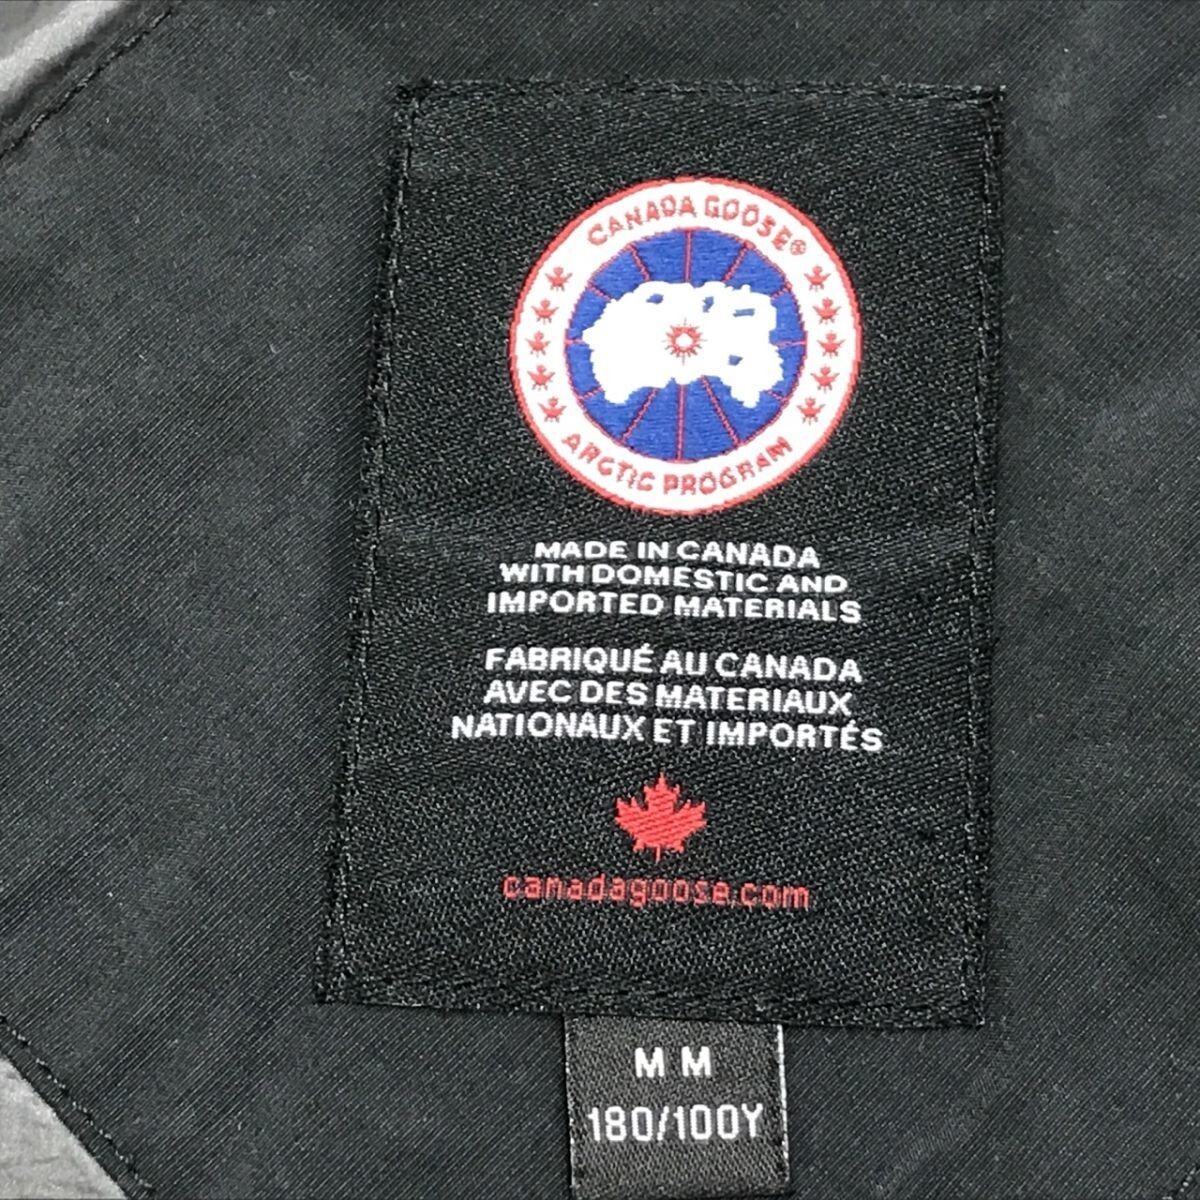 CANADA GOOSE Canada Goose hybrid ji coat M size men's down jacket [N0477]